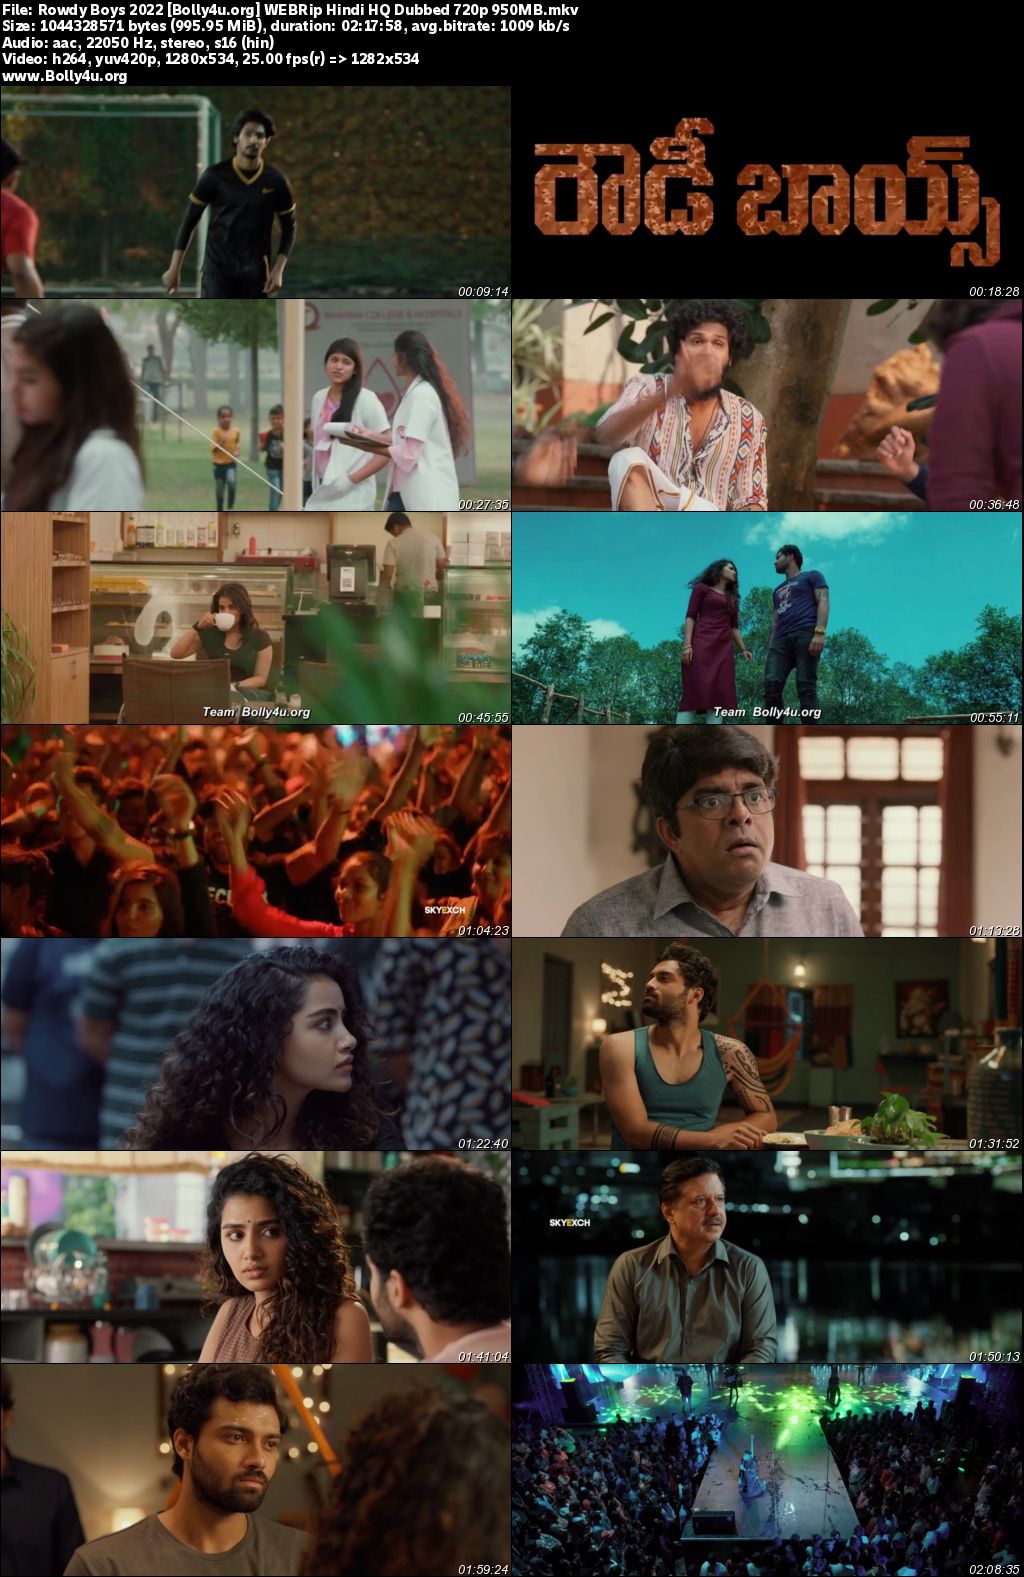 Rowdy Boys 2022 WEBRip Hindi HQ Dubbed Full Movie Download 1080p 720p 480p